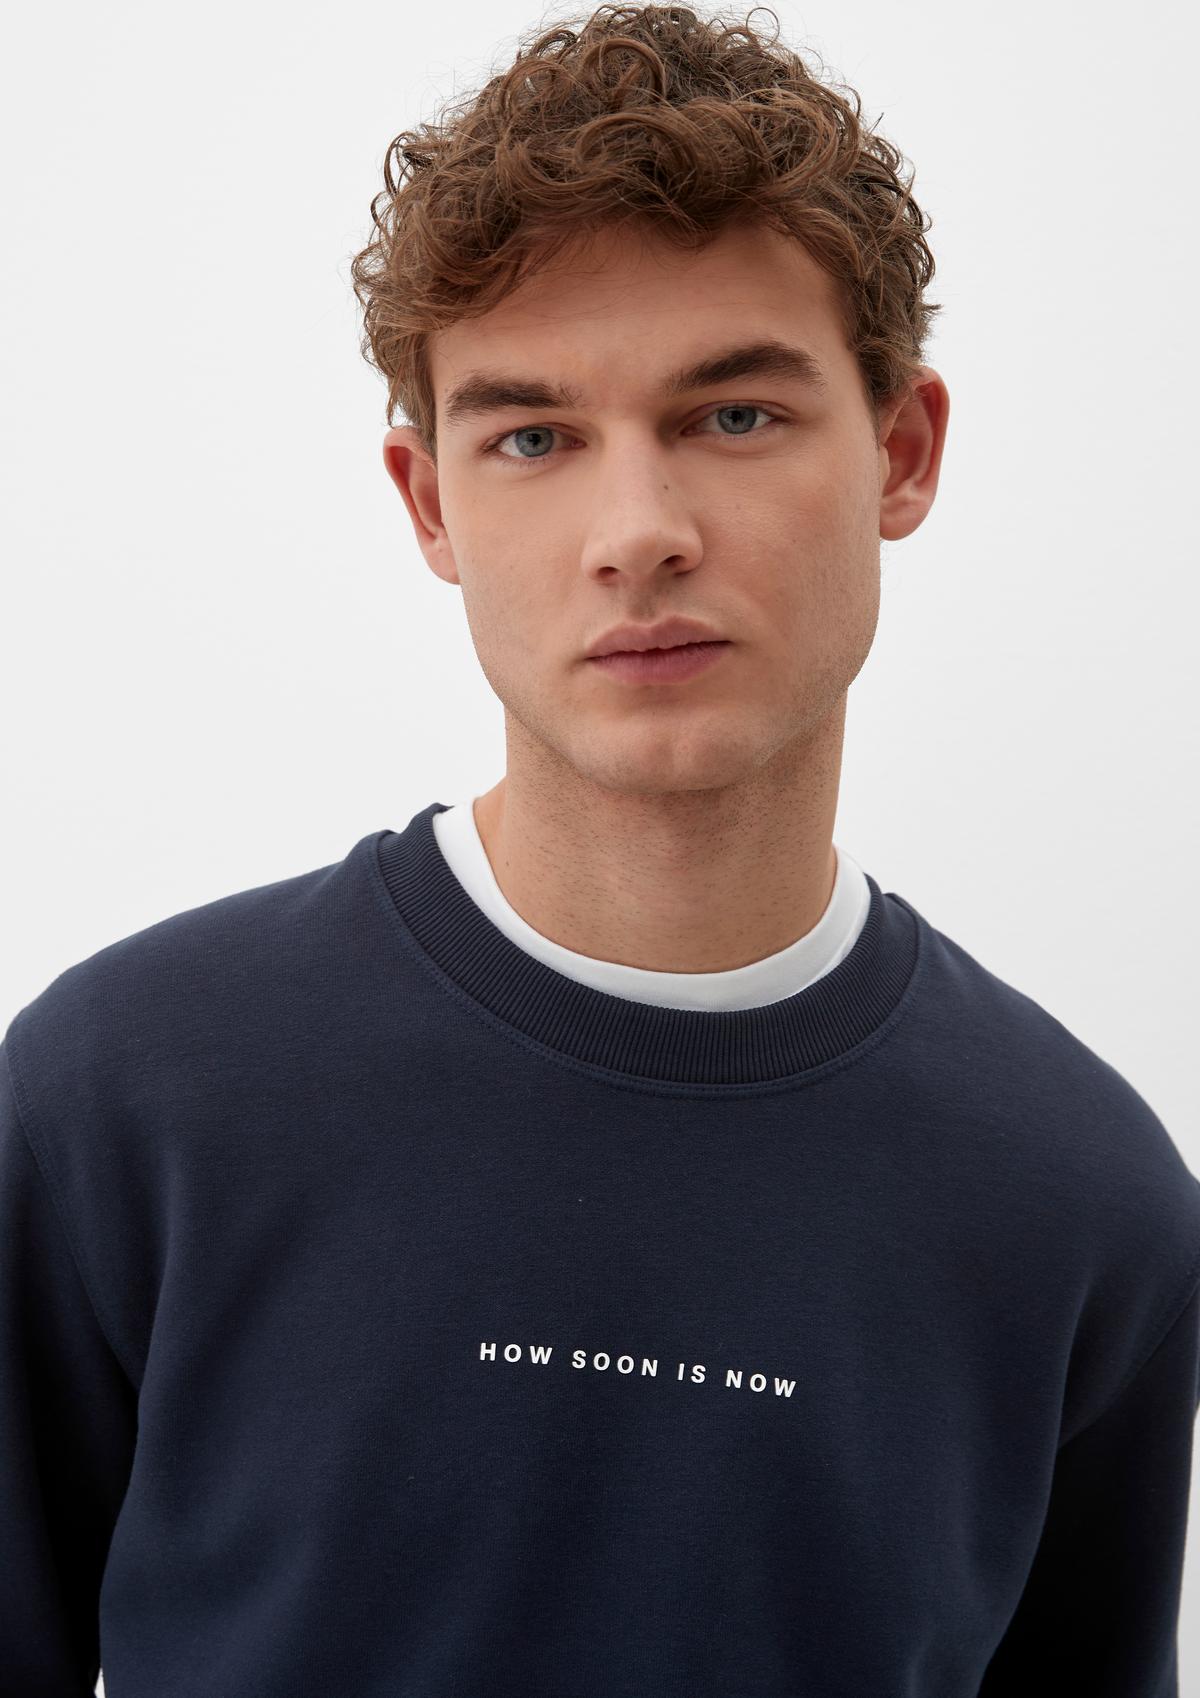 Sweatshirt with a front print - navy | Sweatshirts